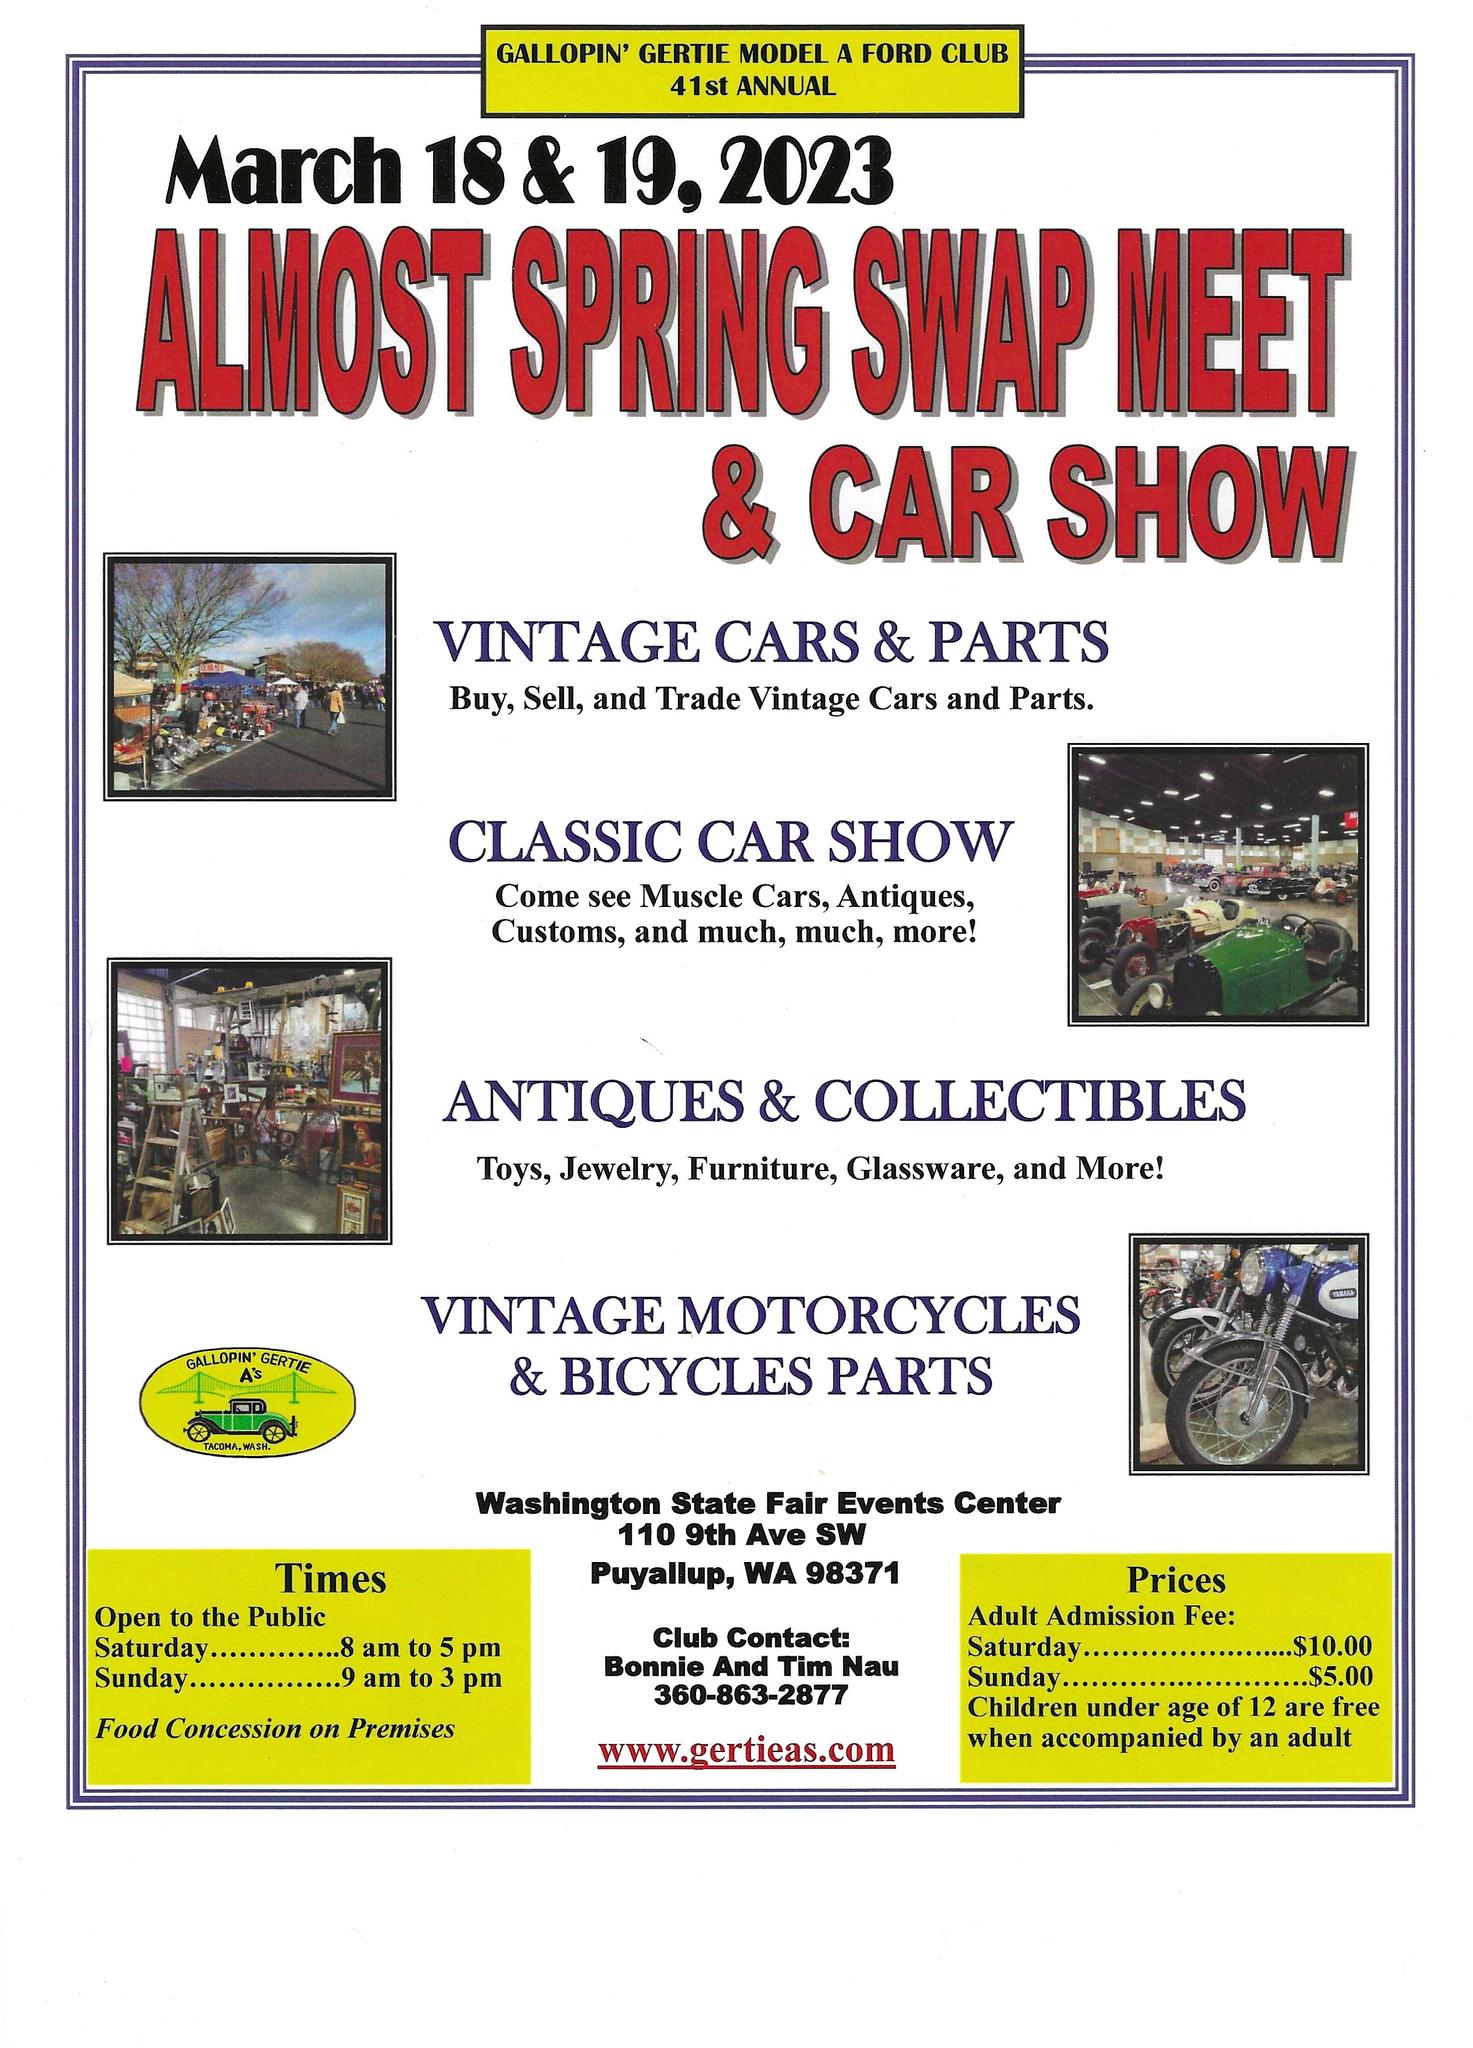 Almost Spring Swap Meet & Car Show